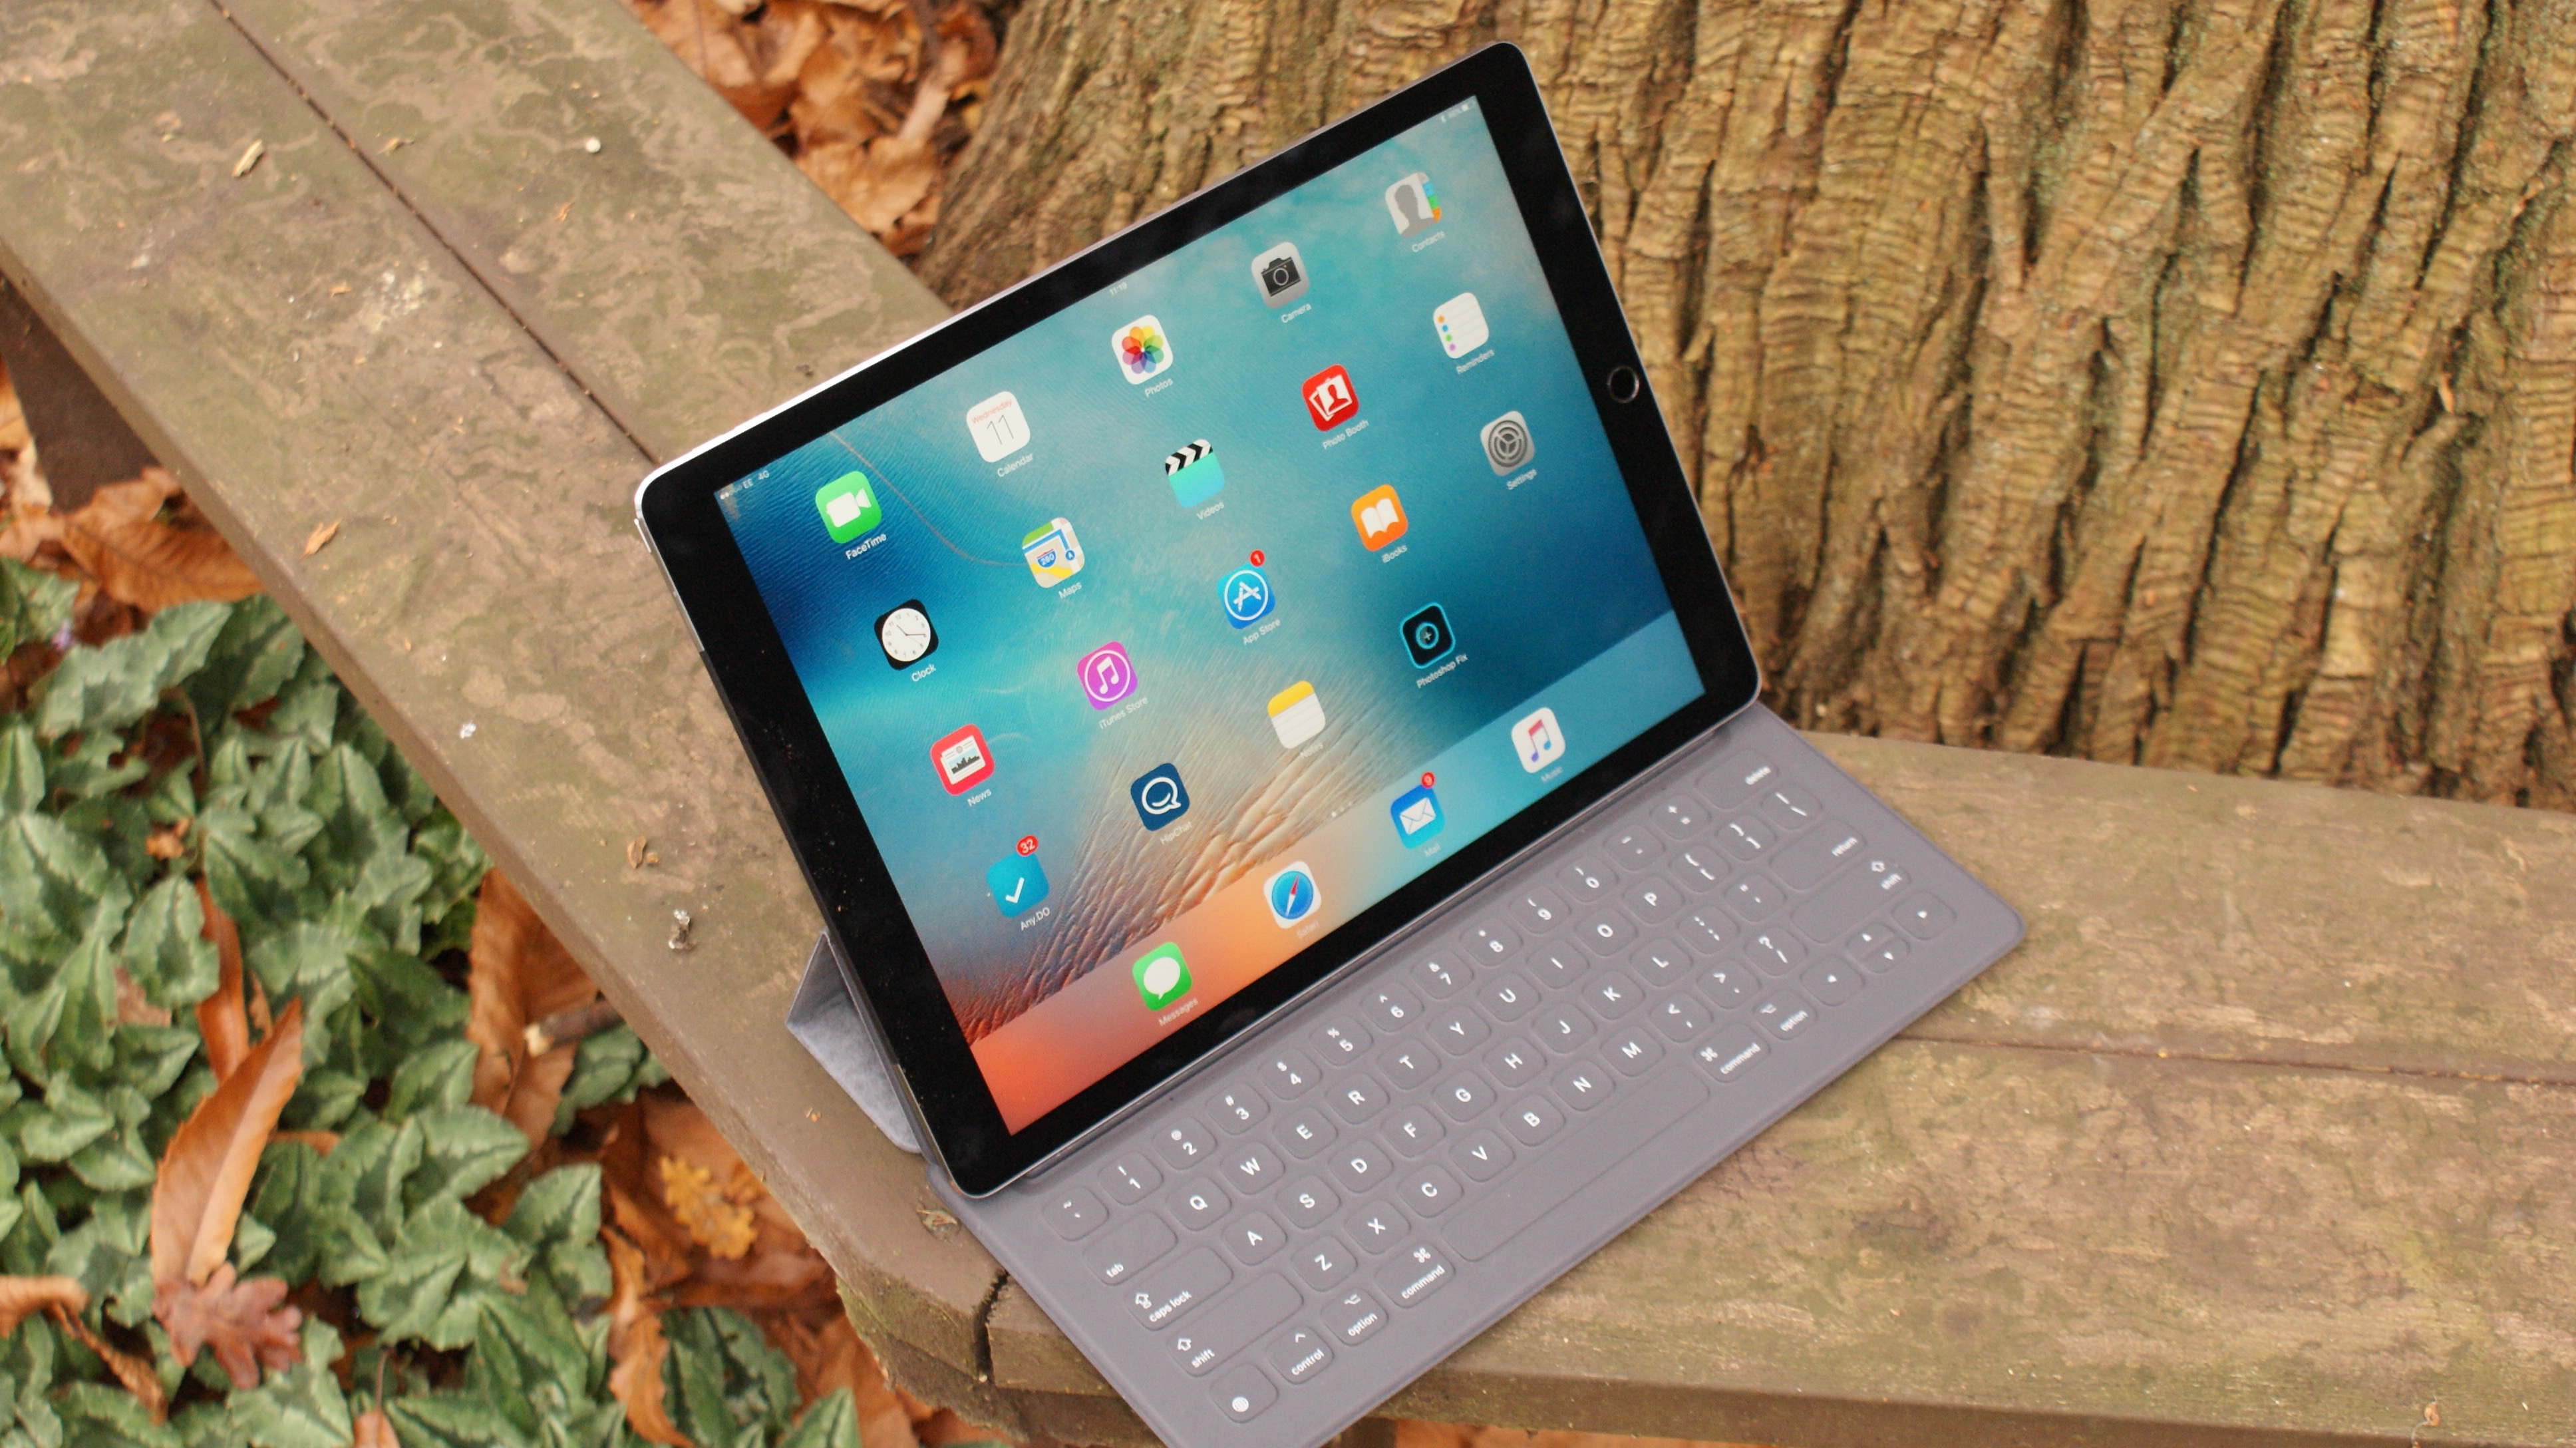 iPad Pro 12.9 (2015) review